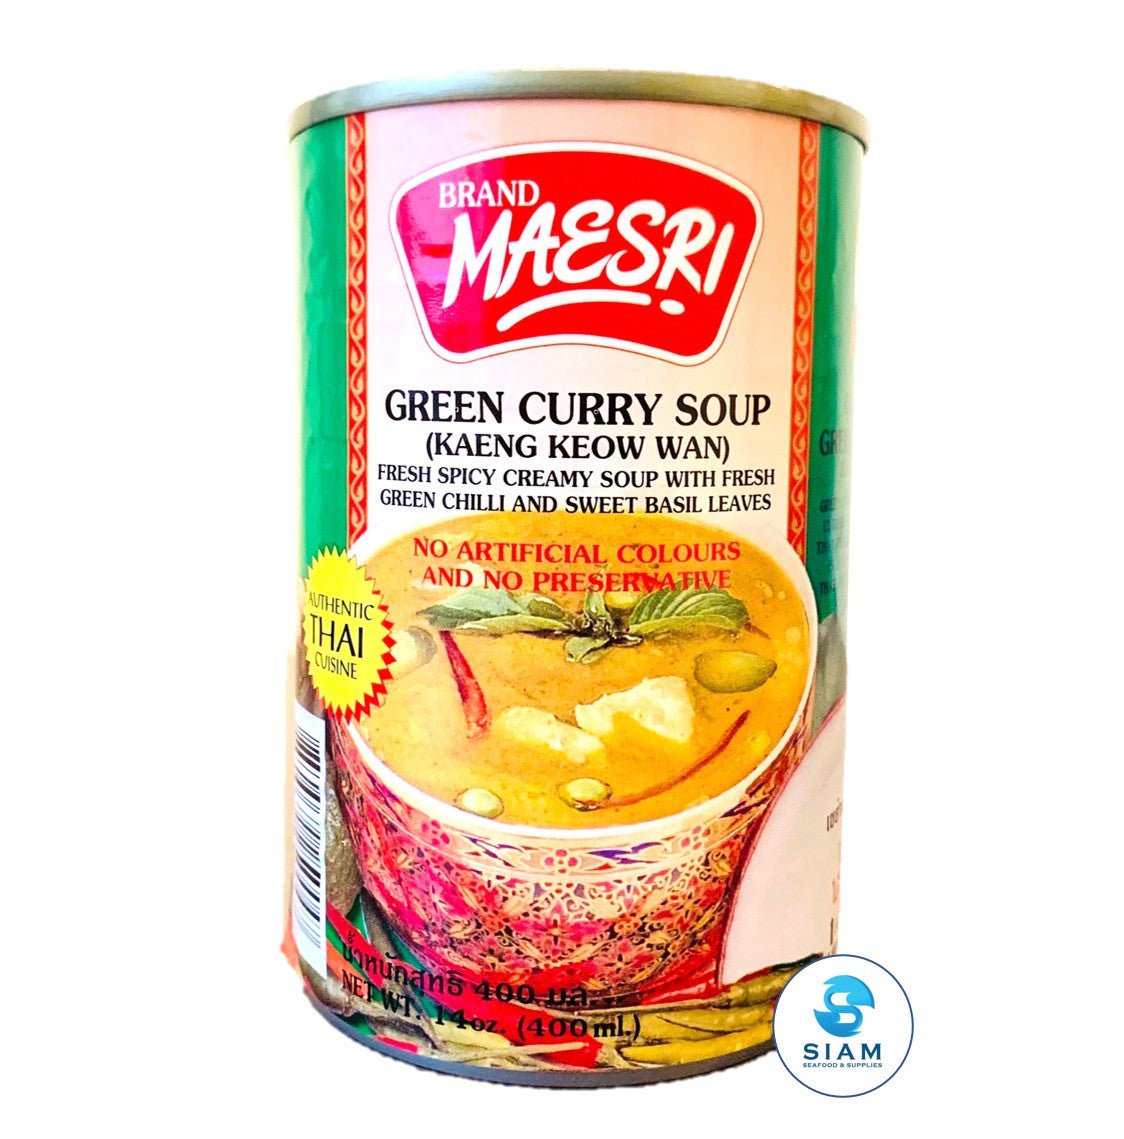 Green Curry Soup, Ready to Cook - MaeSri (14 oz-Net Wt 16.7 oz) ซุปแกงเขียวหวานสำเร็จรูป แม่ศรี shippable MaeSri